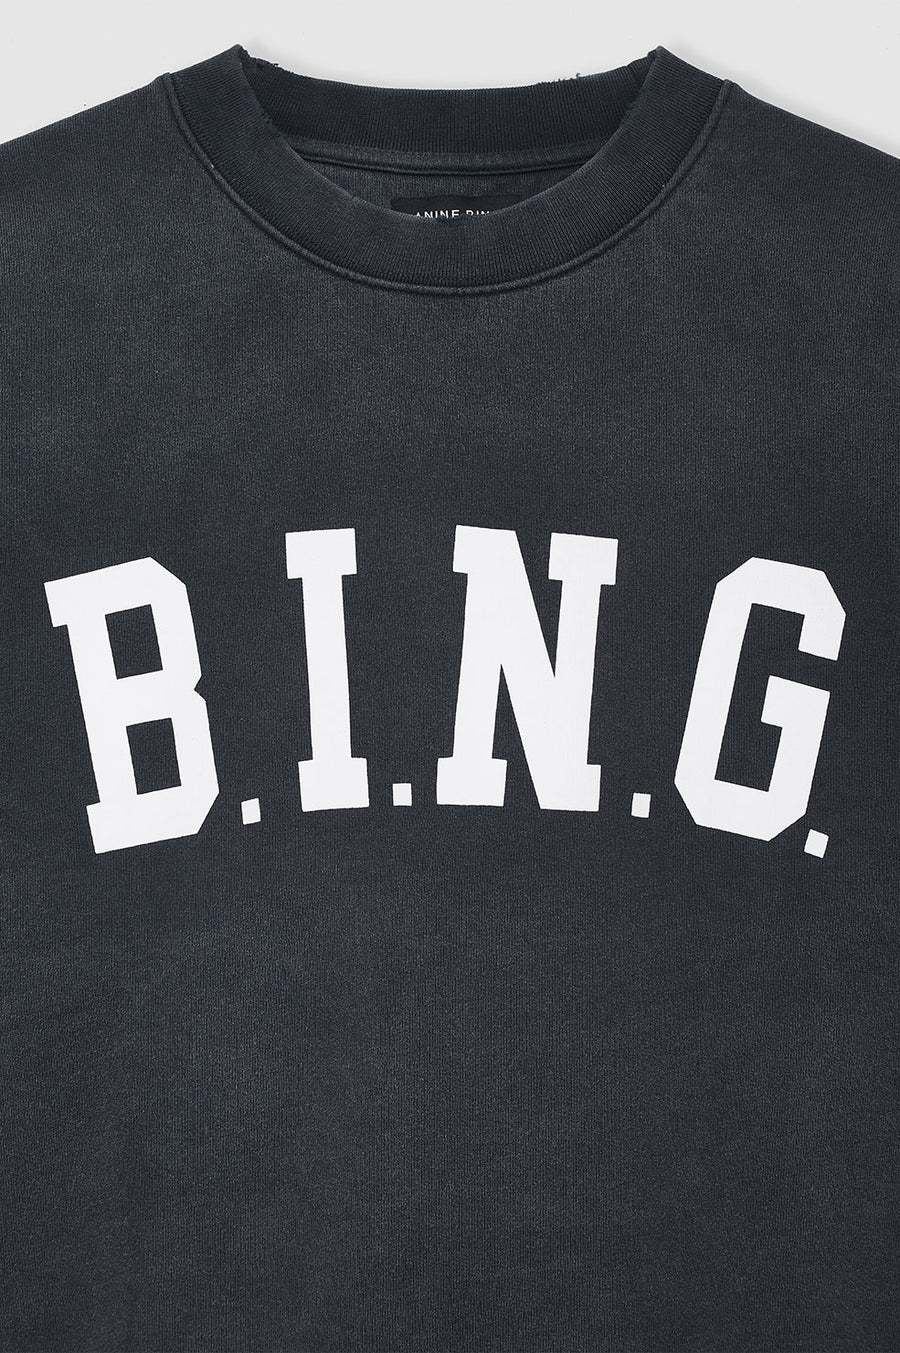 ANINE BING Tyler Bing Sweatshirt in Washed Black